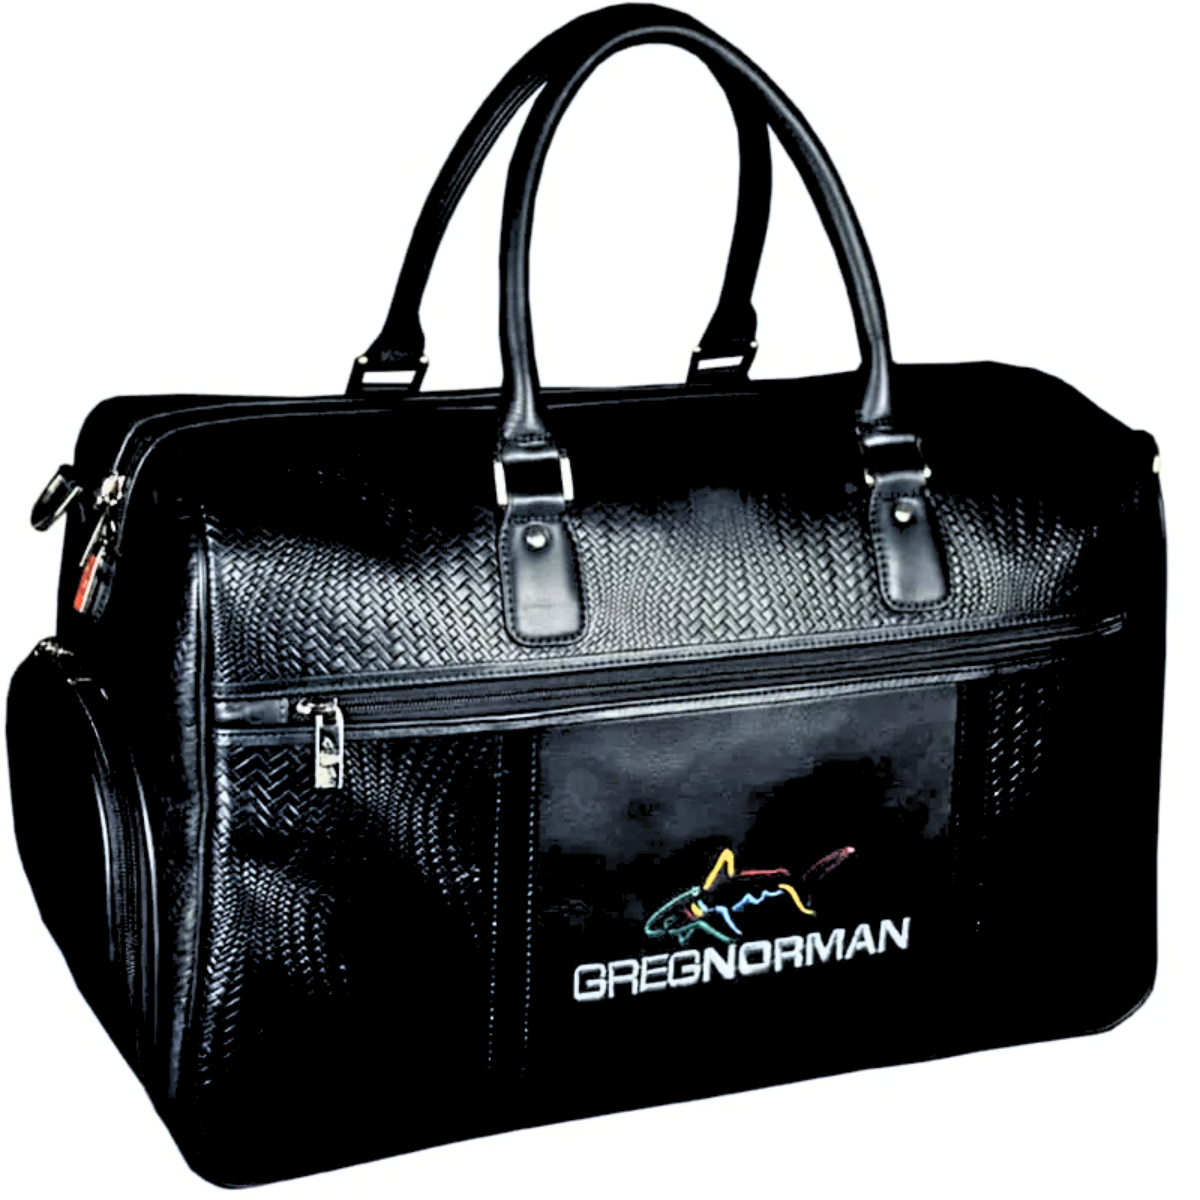 Greg Norman GNLB007 Golf Duffle Bag